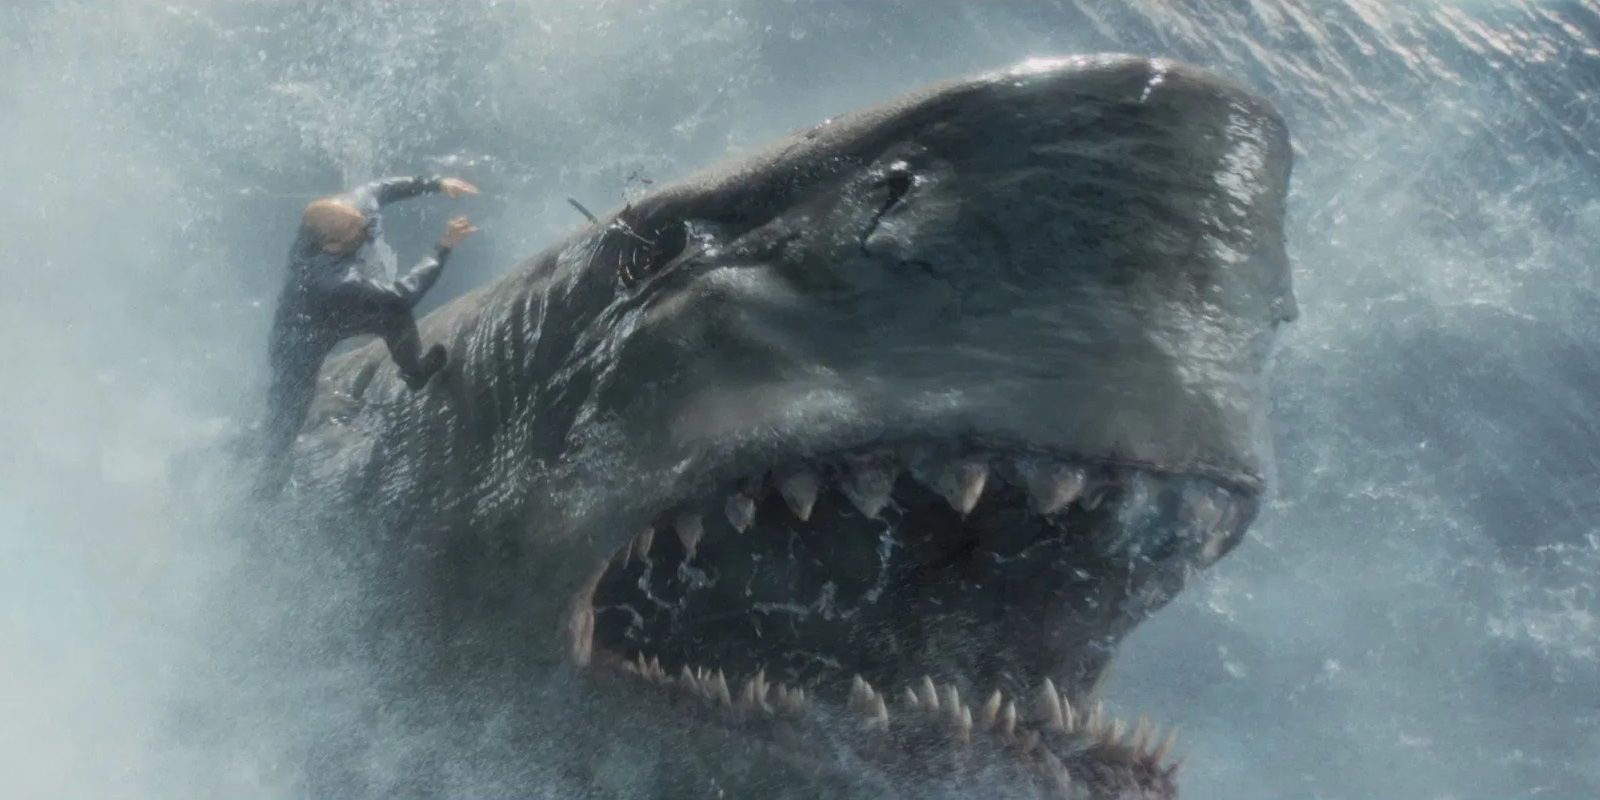 Jason Statham kills the shark in The Meg